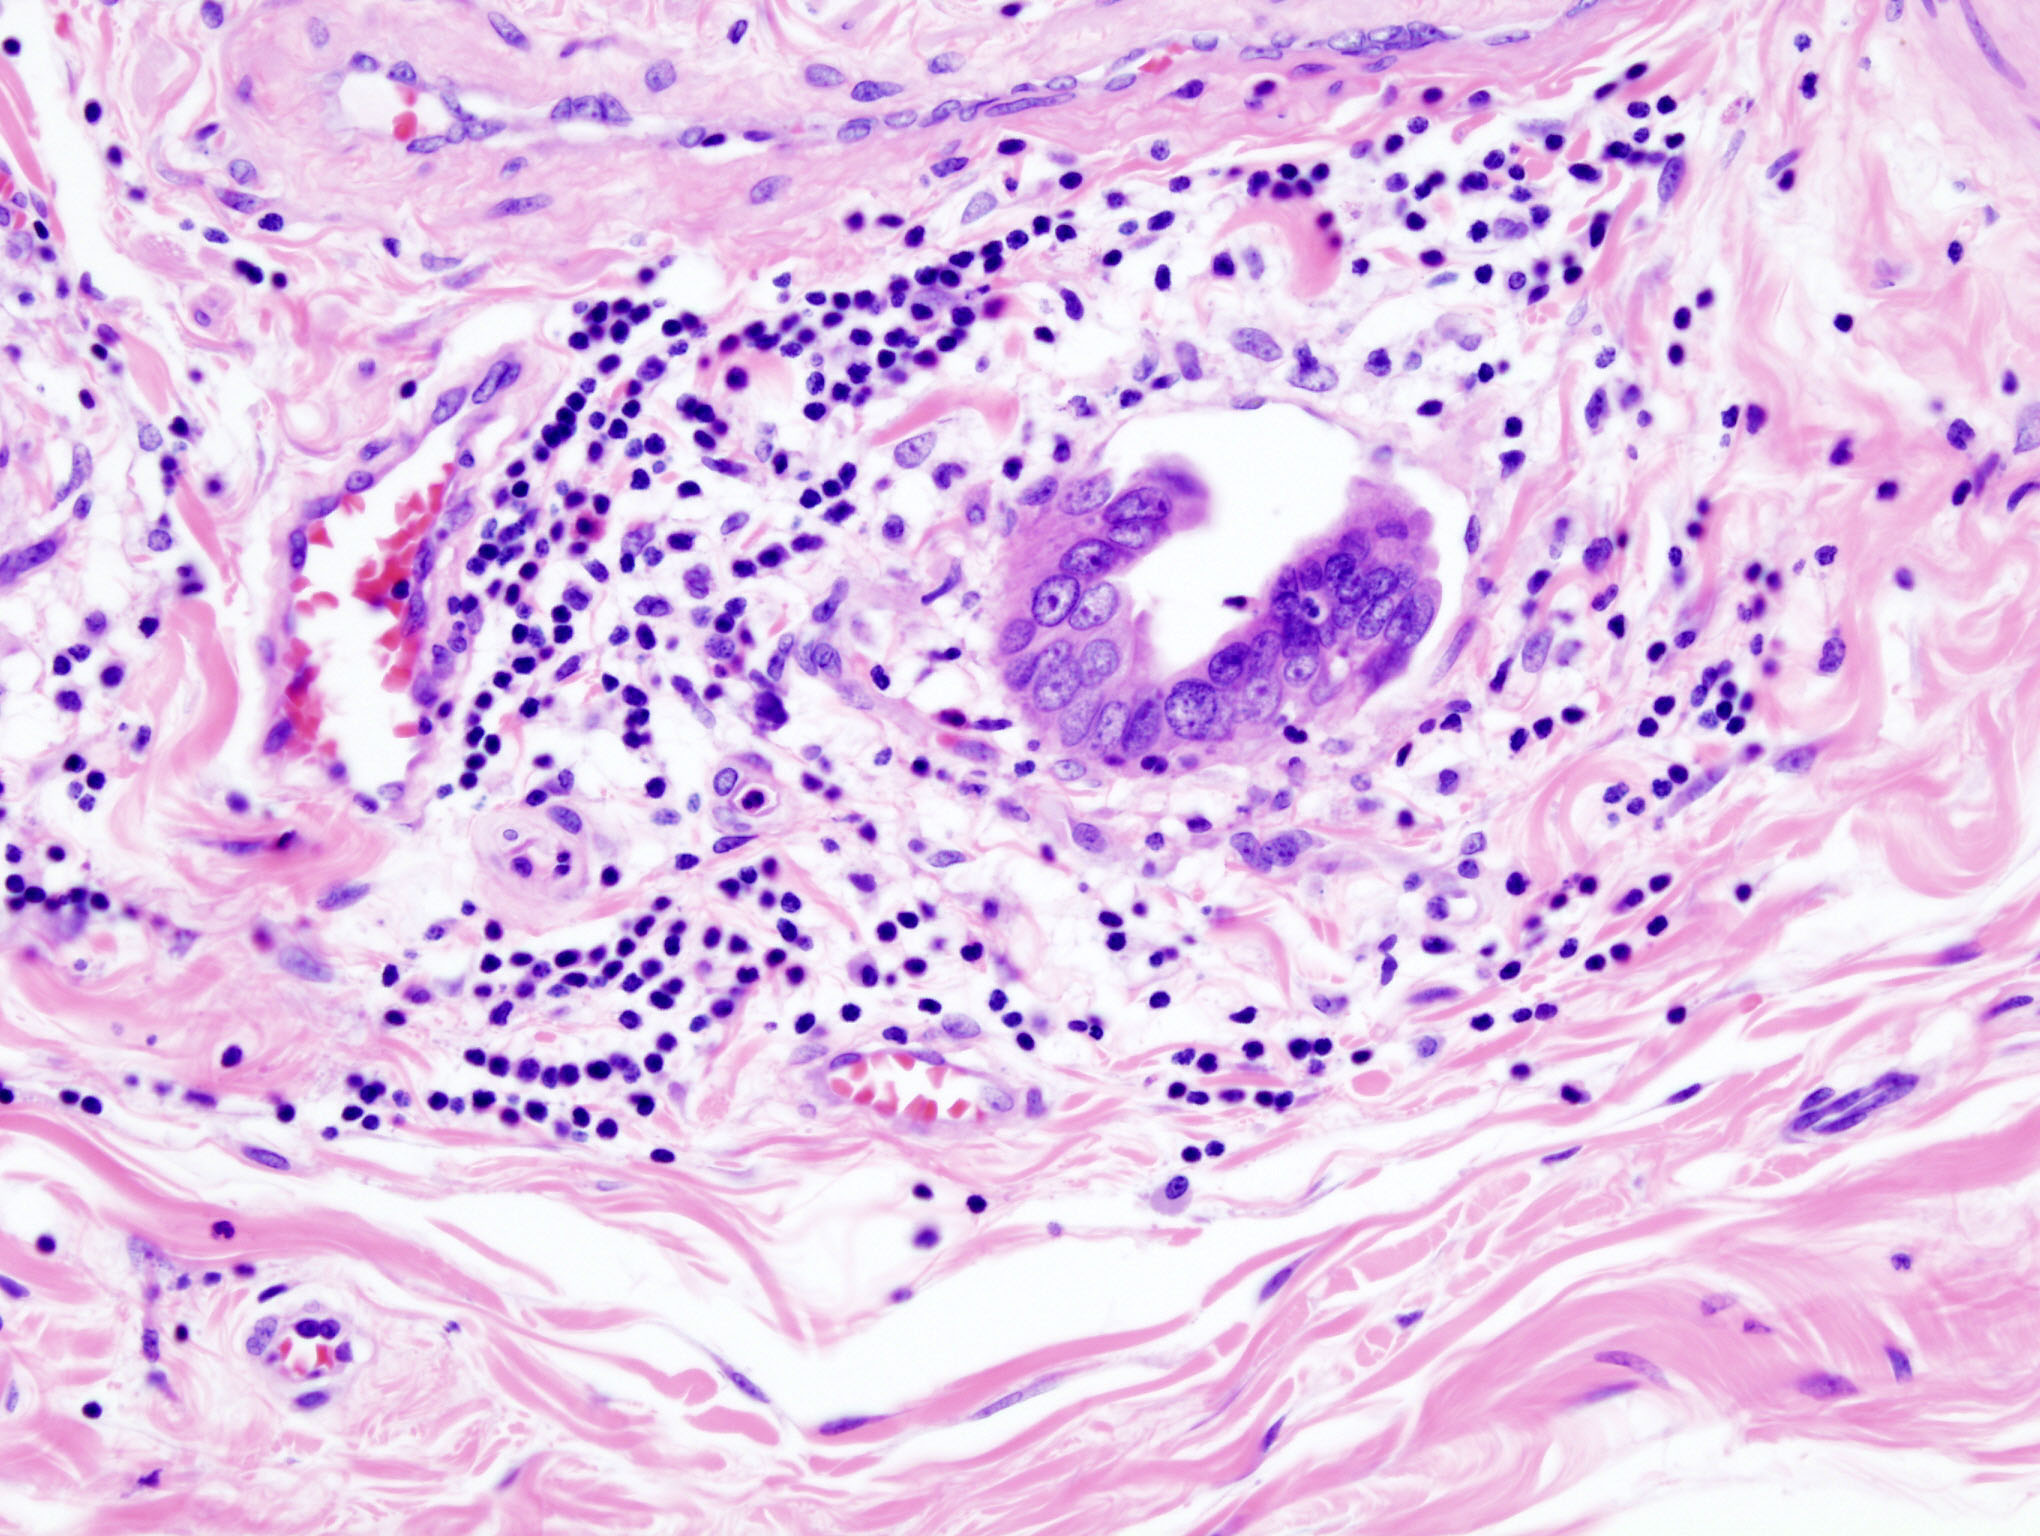 Gallbladder adenocarcinoma: Lymphatic invasion histopathology